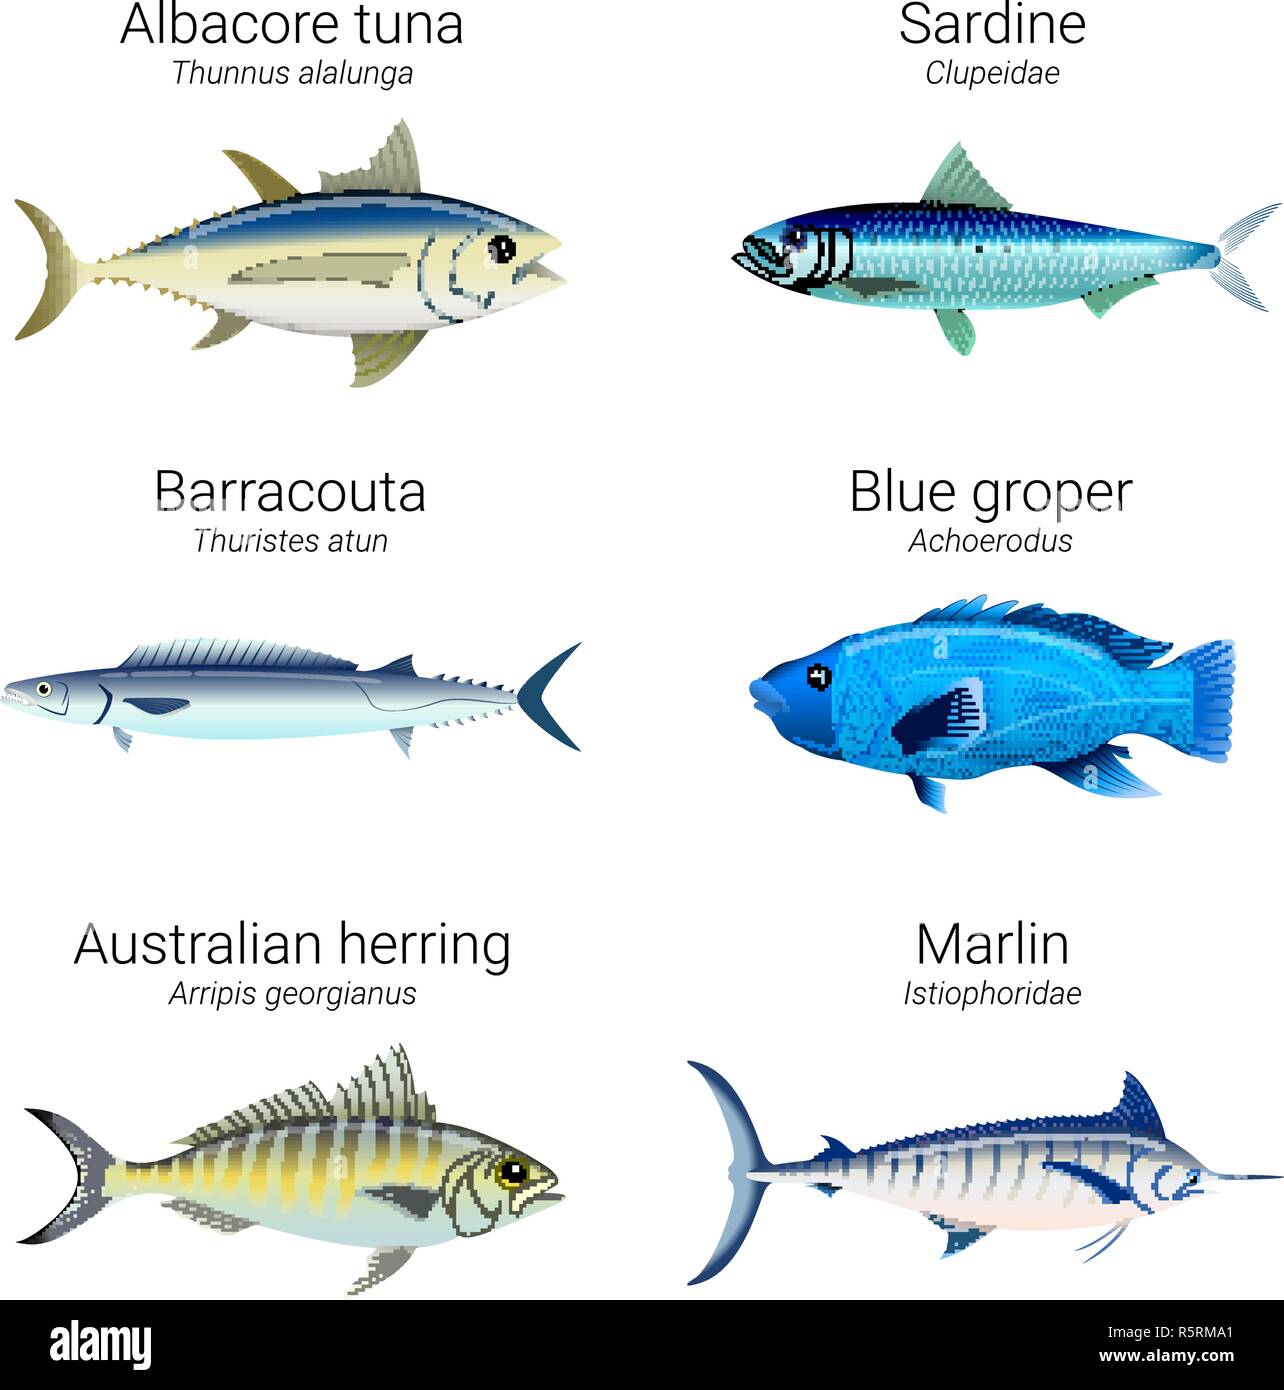 Set of fishes found in Australian coastline - Albacore tuna, sardine, barracouta, blue groper, Australian herring and marlin Stock Vector